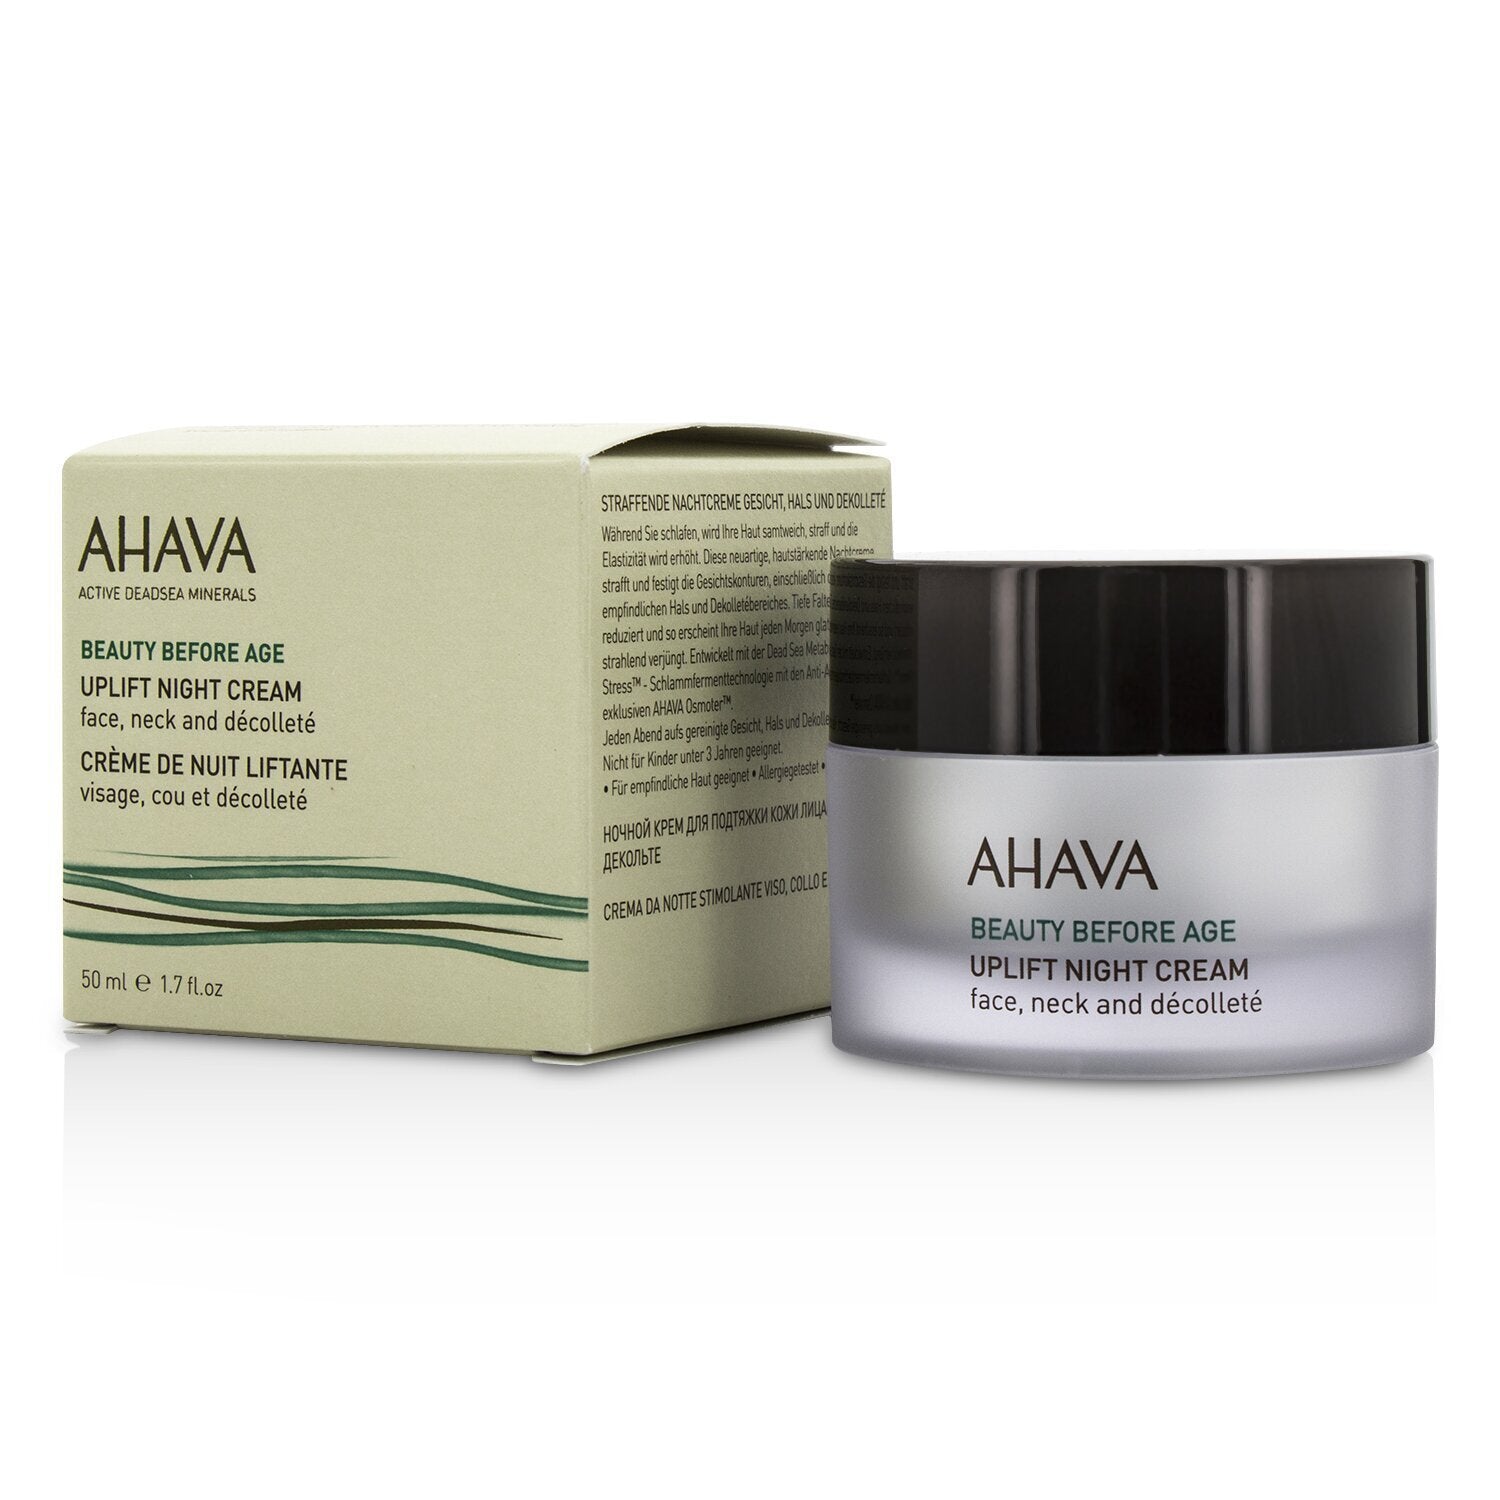 Ahava Beauty Before 50ml/1.7oz – Fresh Night Uplift Cream Beauty Age